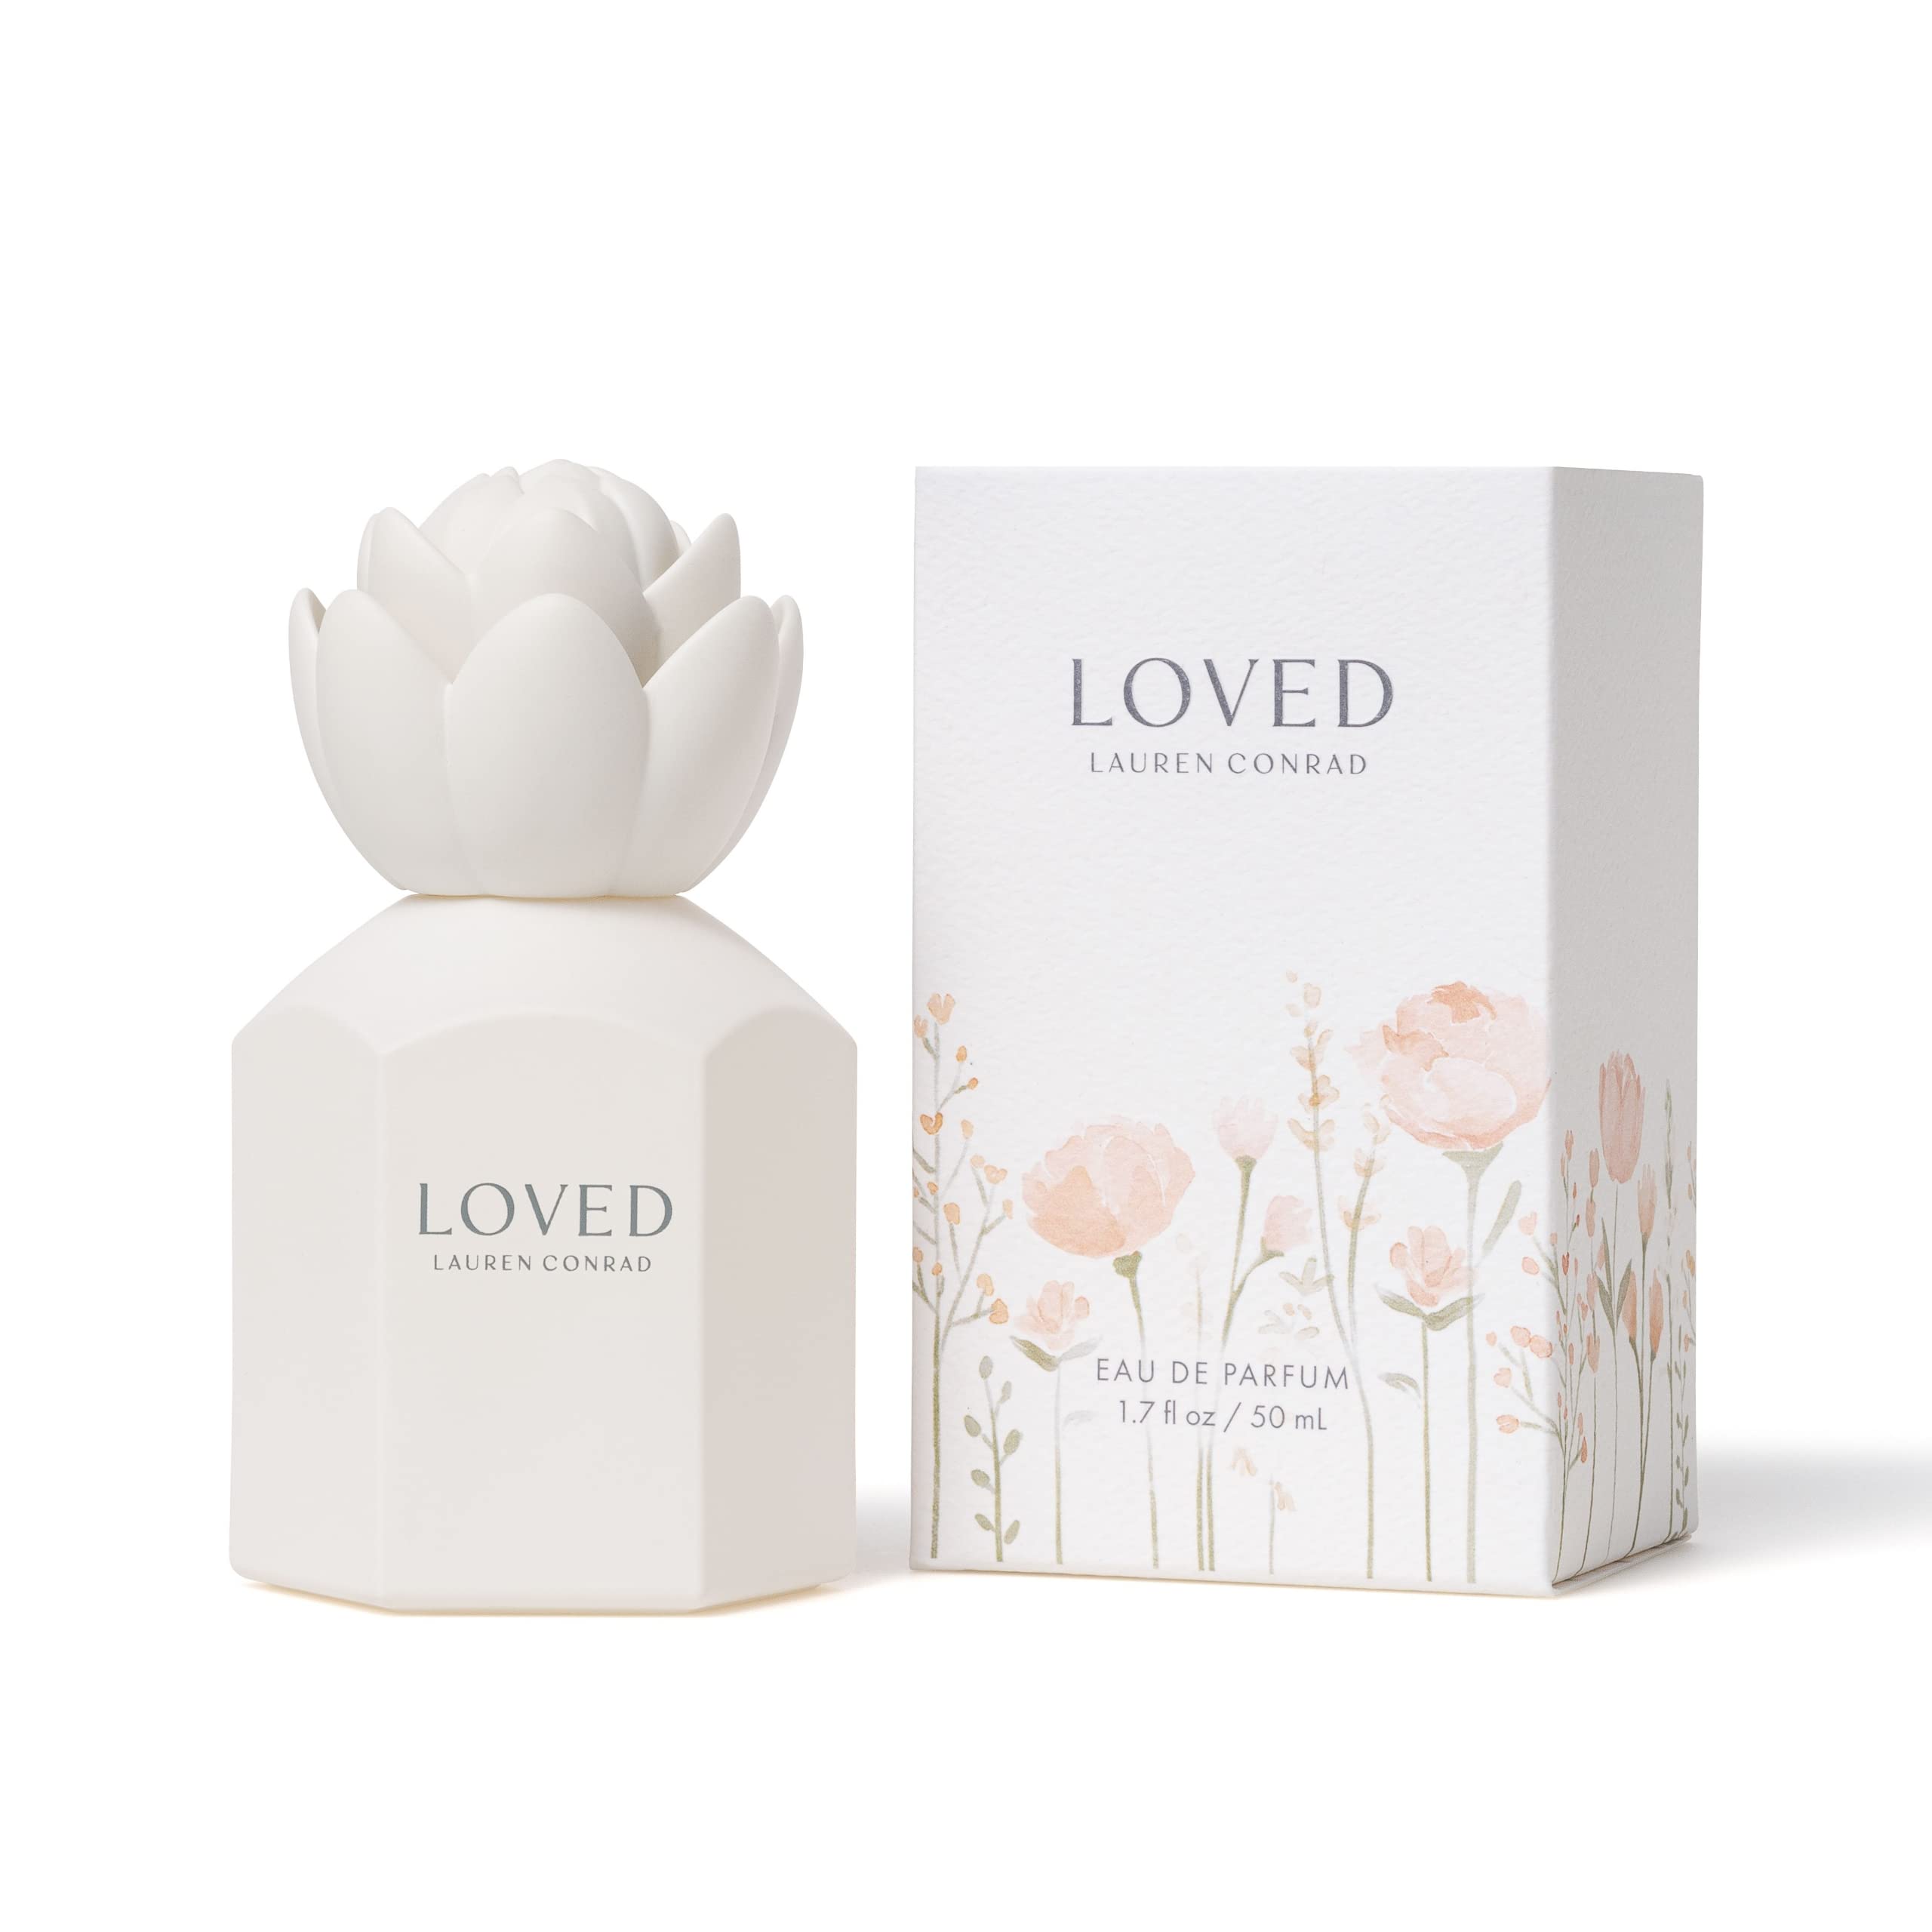 SCENT BEAUTY Loved Eau de Parfum by Lauren Conrad - Fragrance for Women - Feminine, Floral Scent with Notes of Citrus, White Tea, Jasmine, and Peony - 1.7 Fl Oz